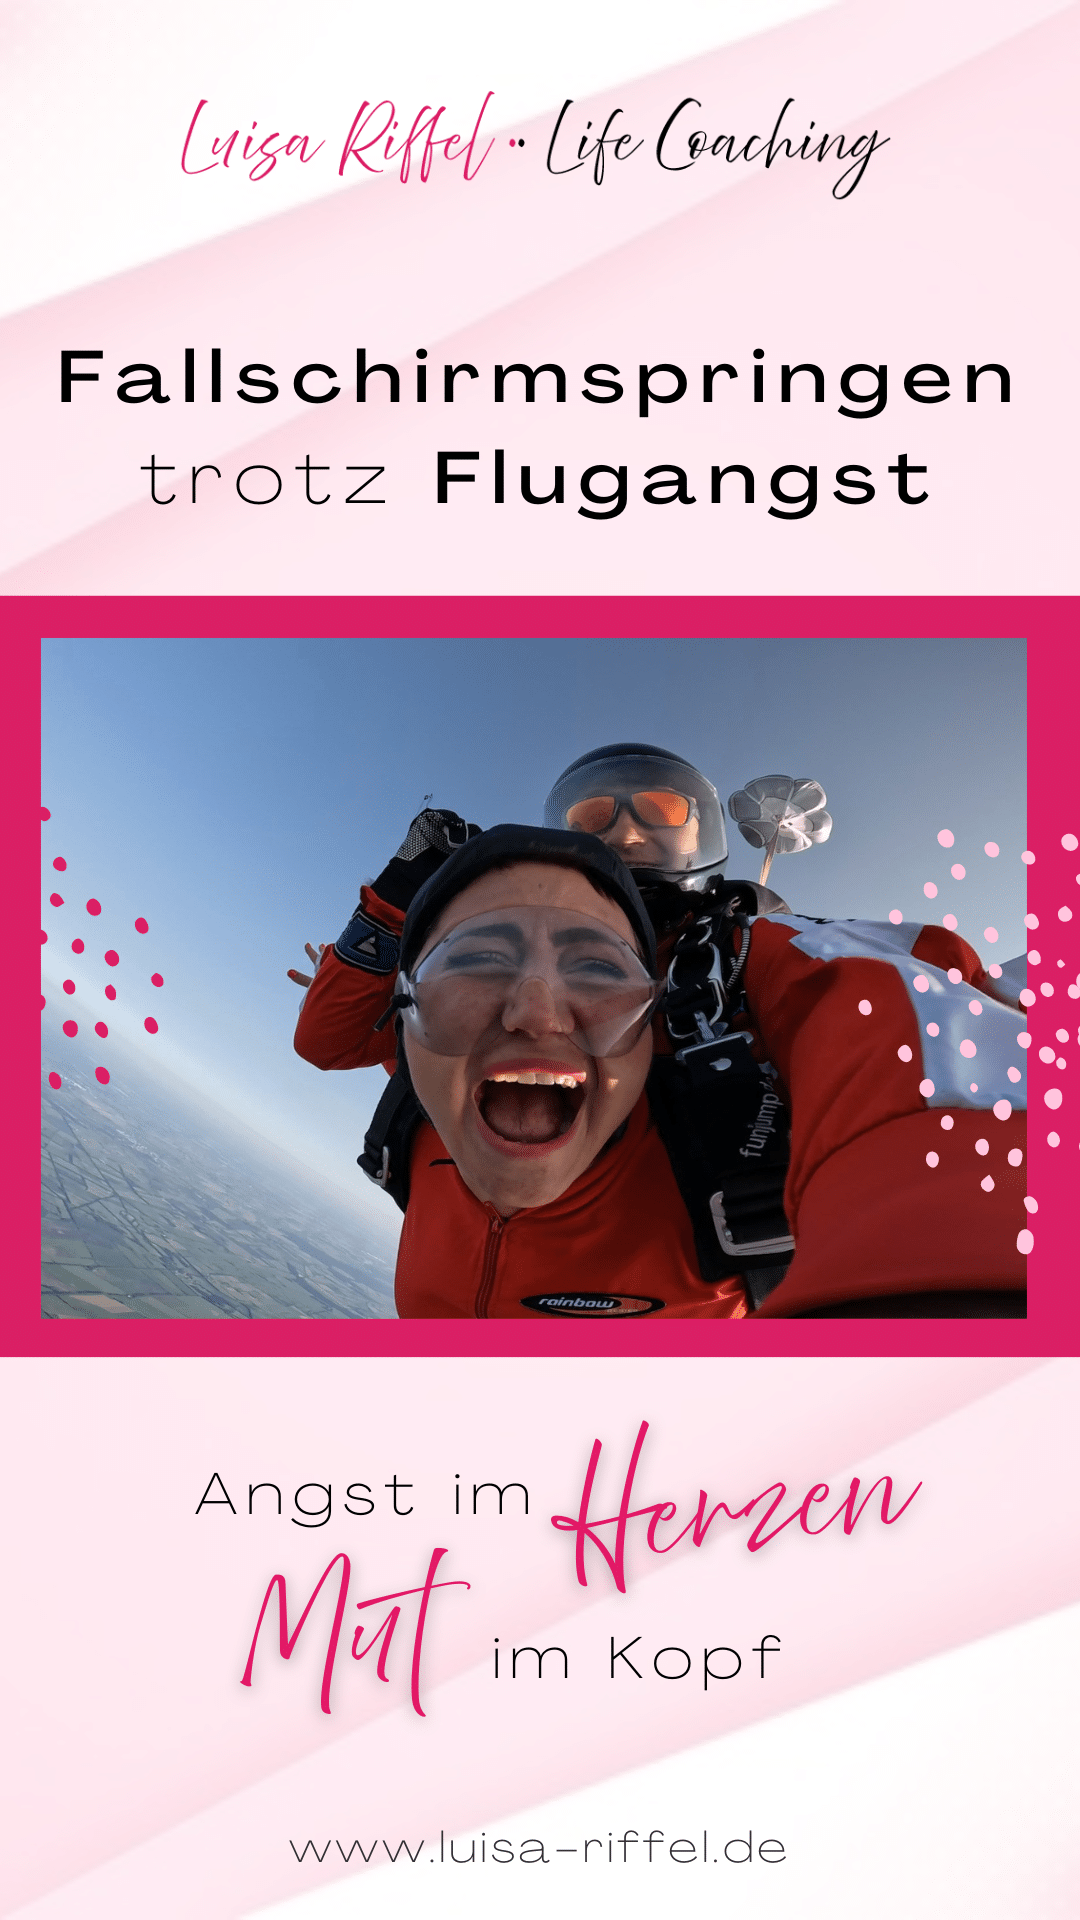 Blogartikel - Fallschirmspringen trotz Flugangst - Angst im Herzen, Mut im Kopf